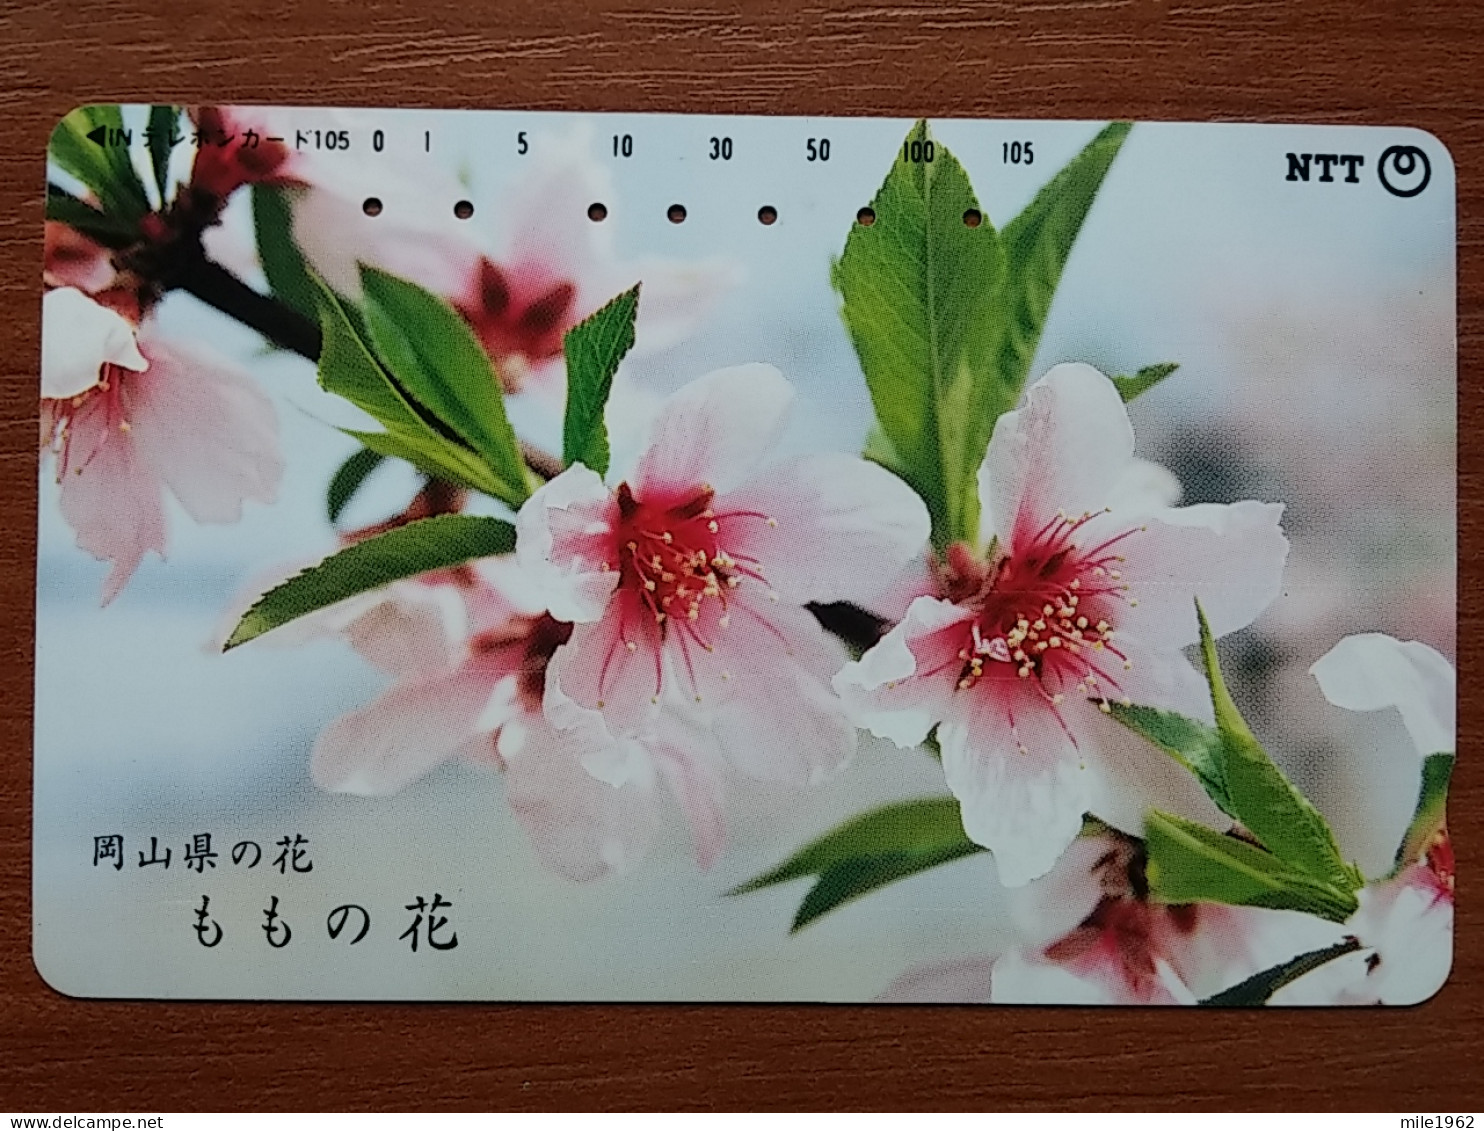 T-382 - JAPAN, Japon, Nipon, TELECARD, PHONECARD, Flower, Fleur, NTT 351-219 - Flores